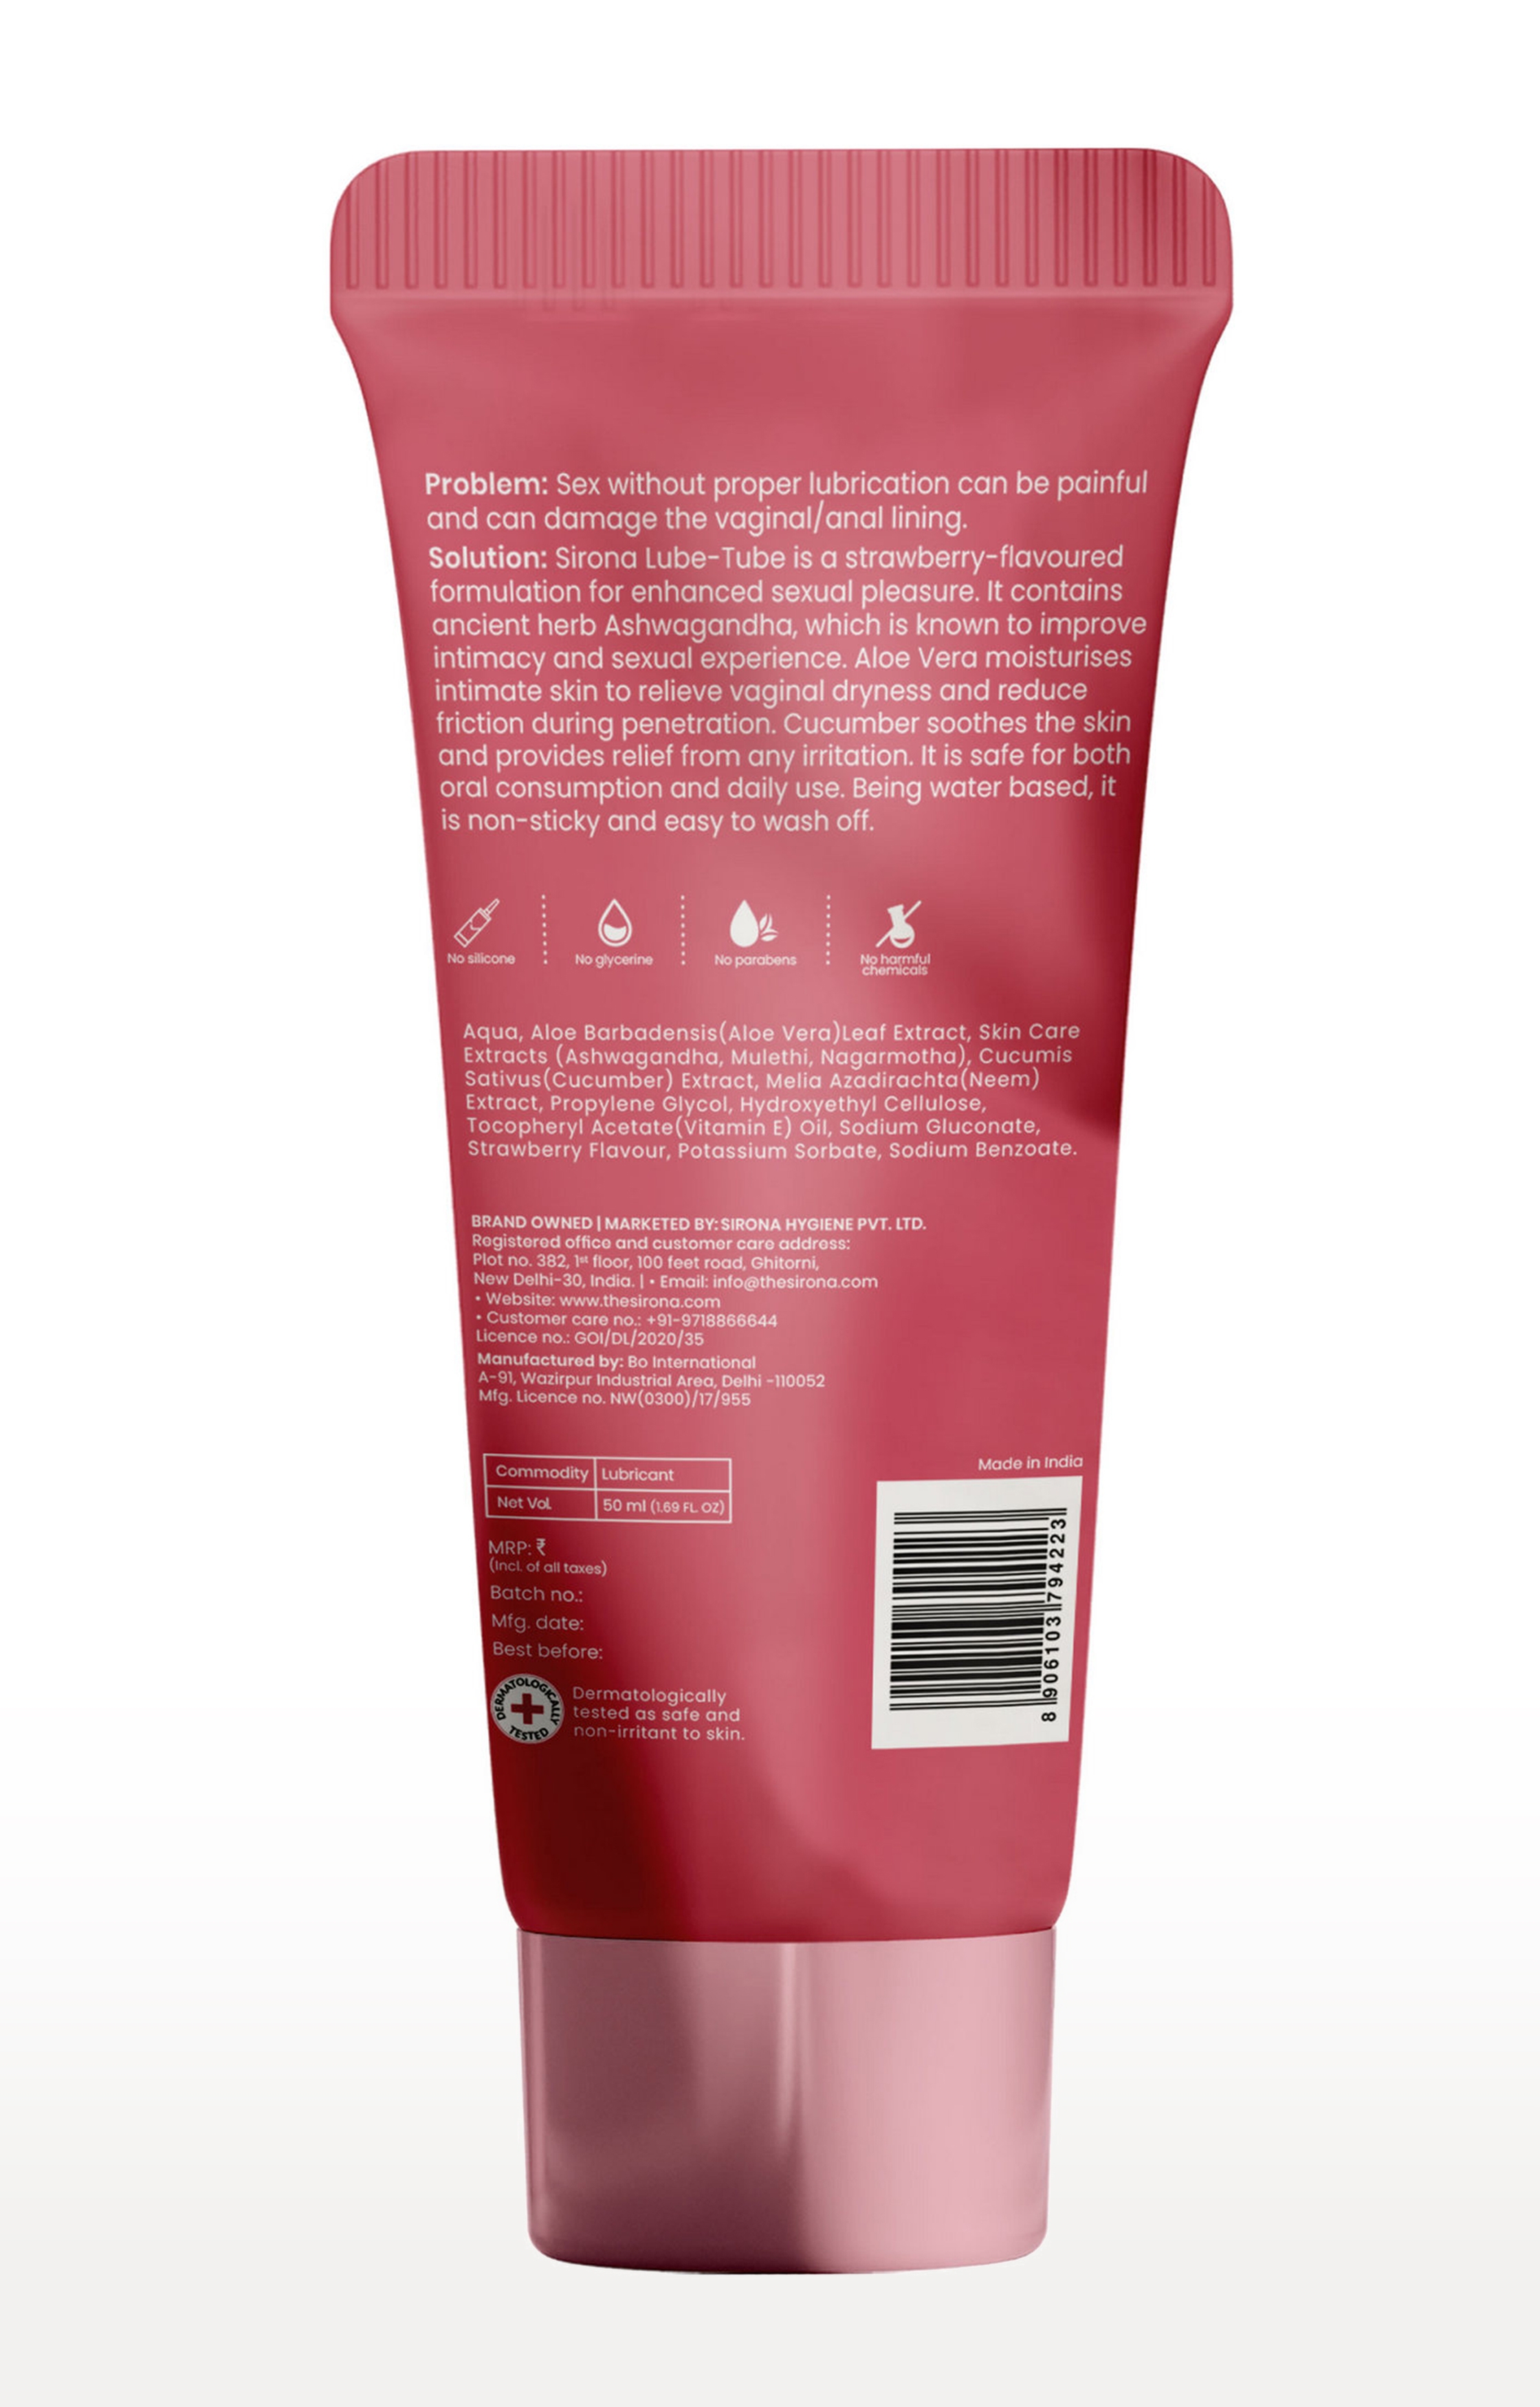 Sirona Glycerine Free Natural Strawberry Lubricant Gel For Men & Women – 50 Ml